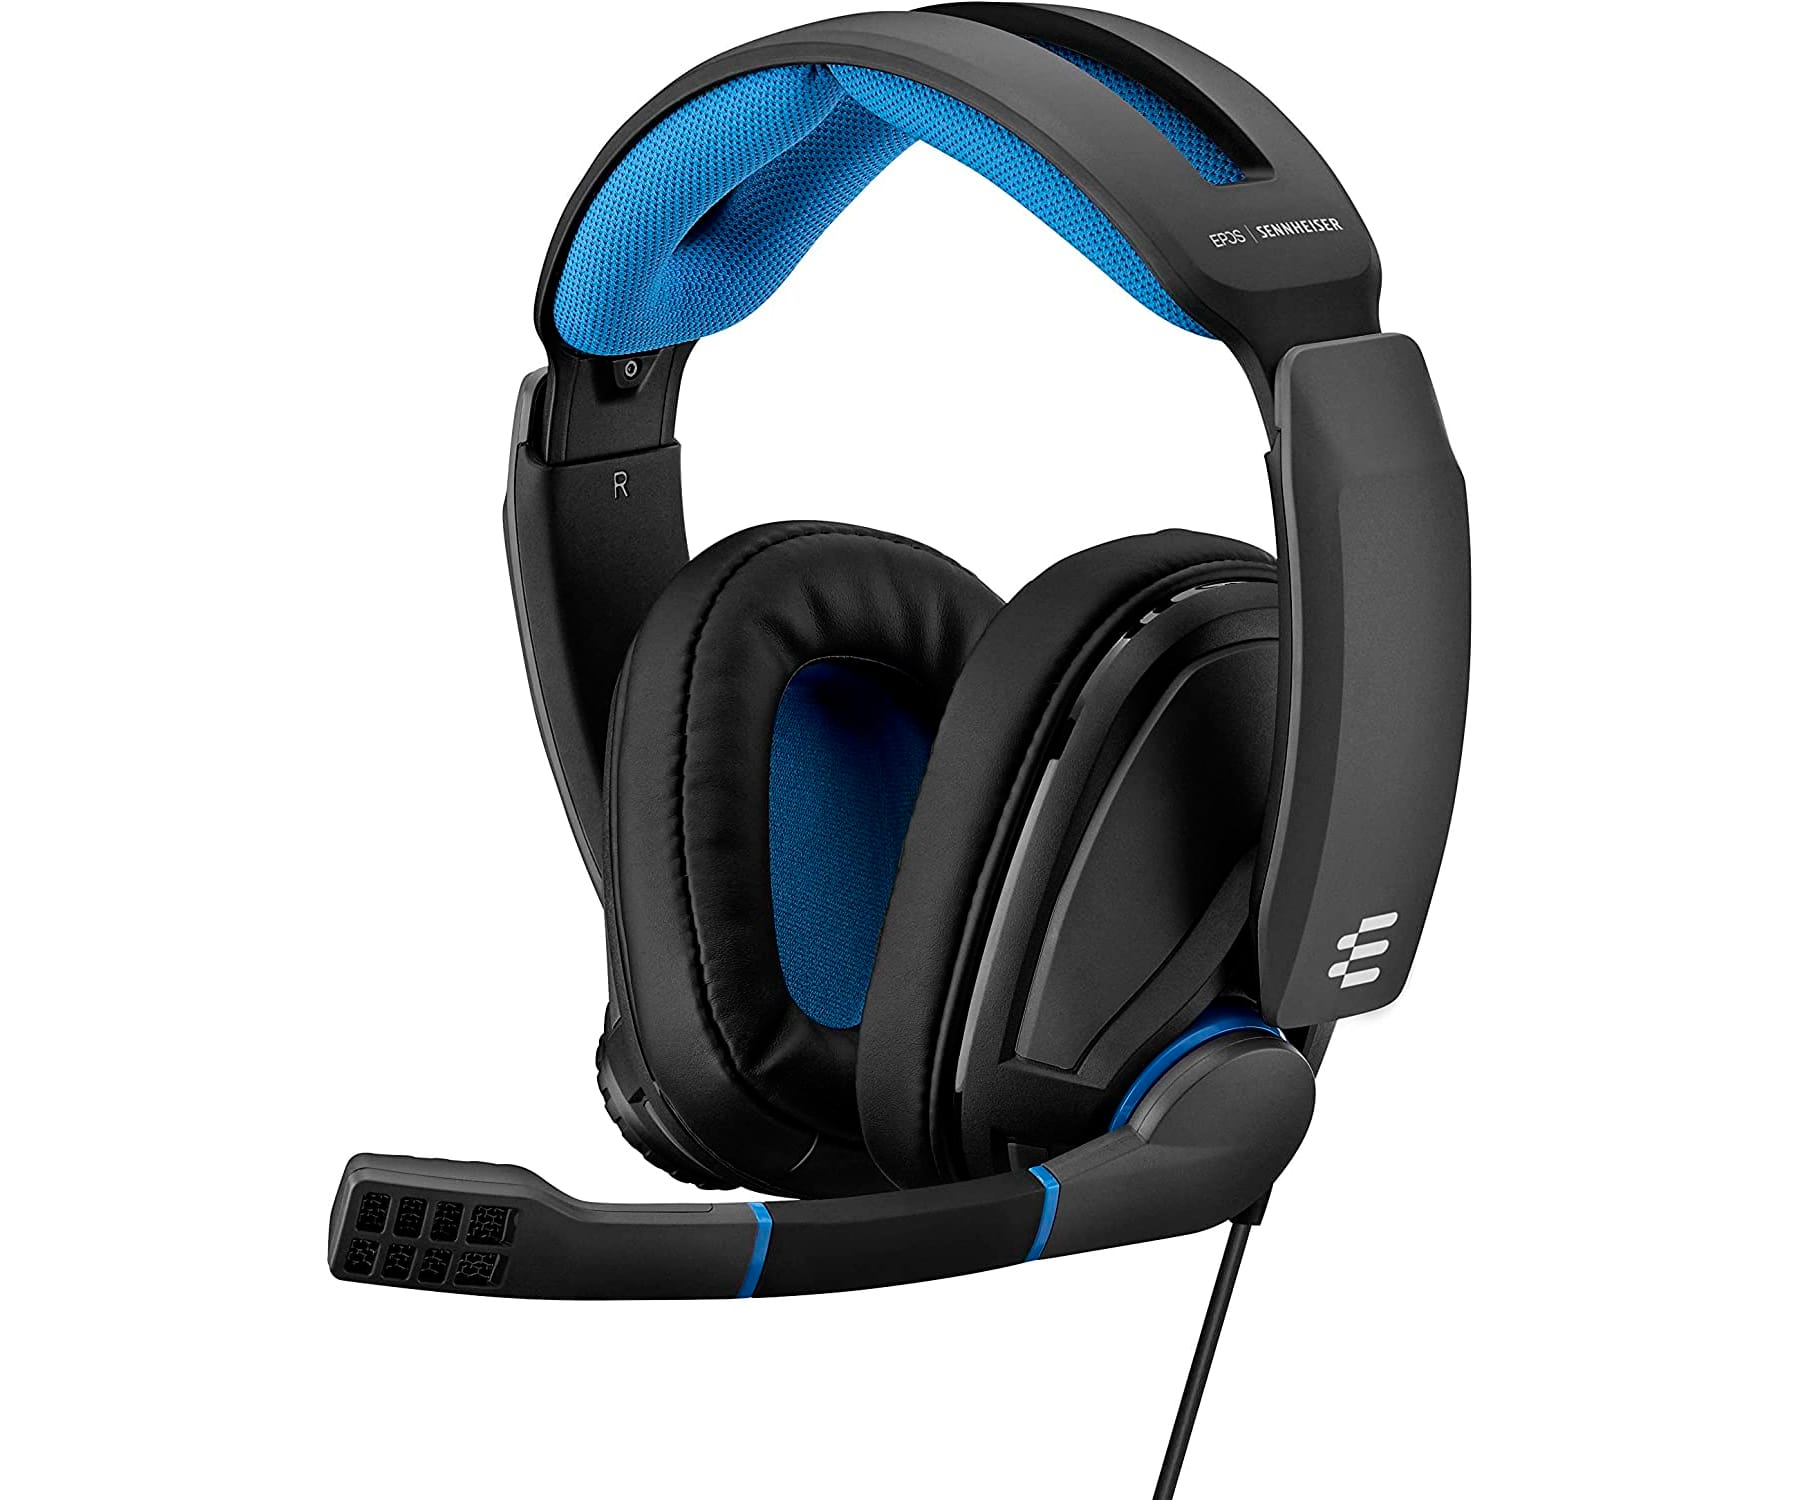 EPOS SENNHEISER GSP 300 Black + Blue / Auriculares Gaming OverEar con cable